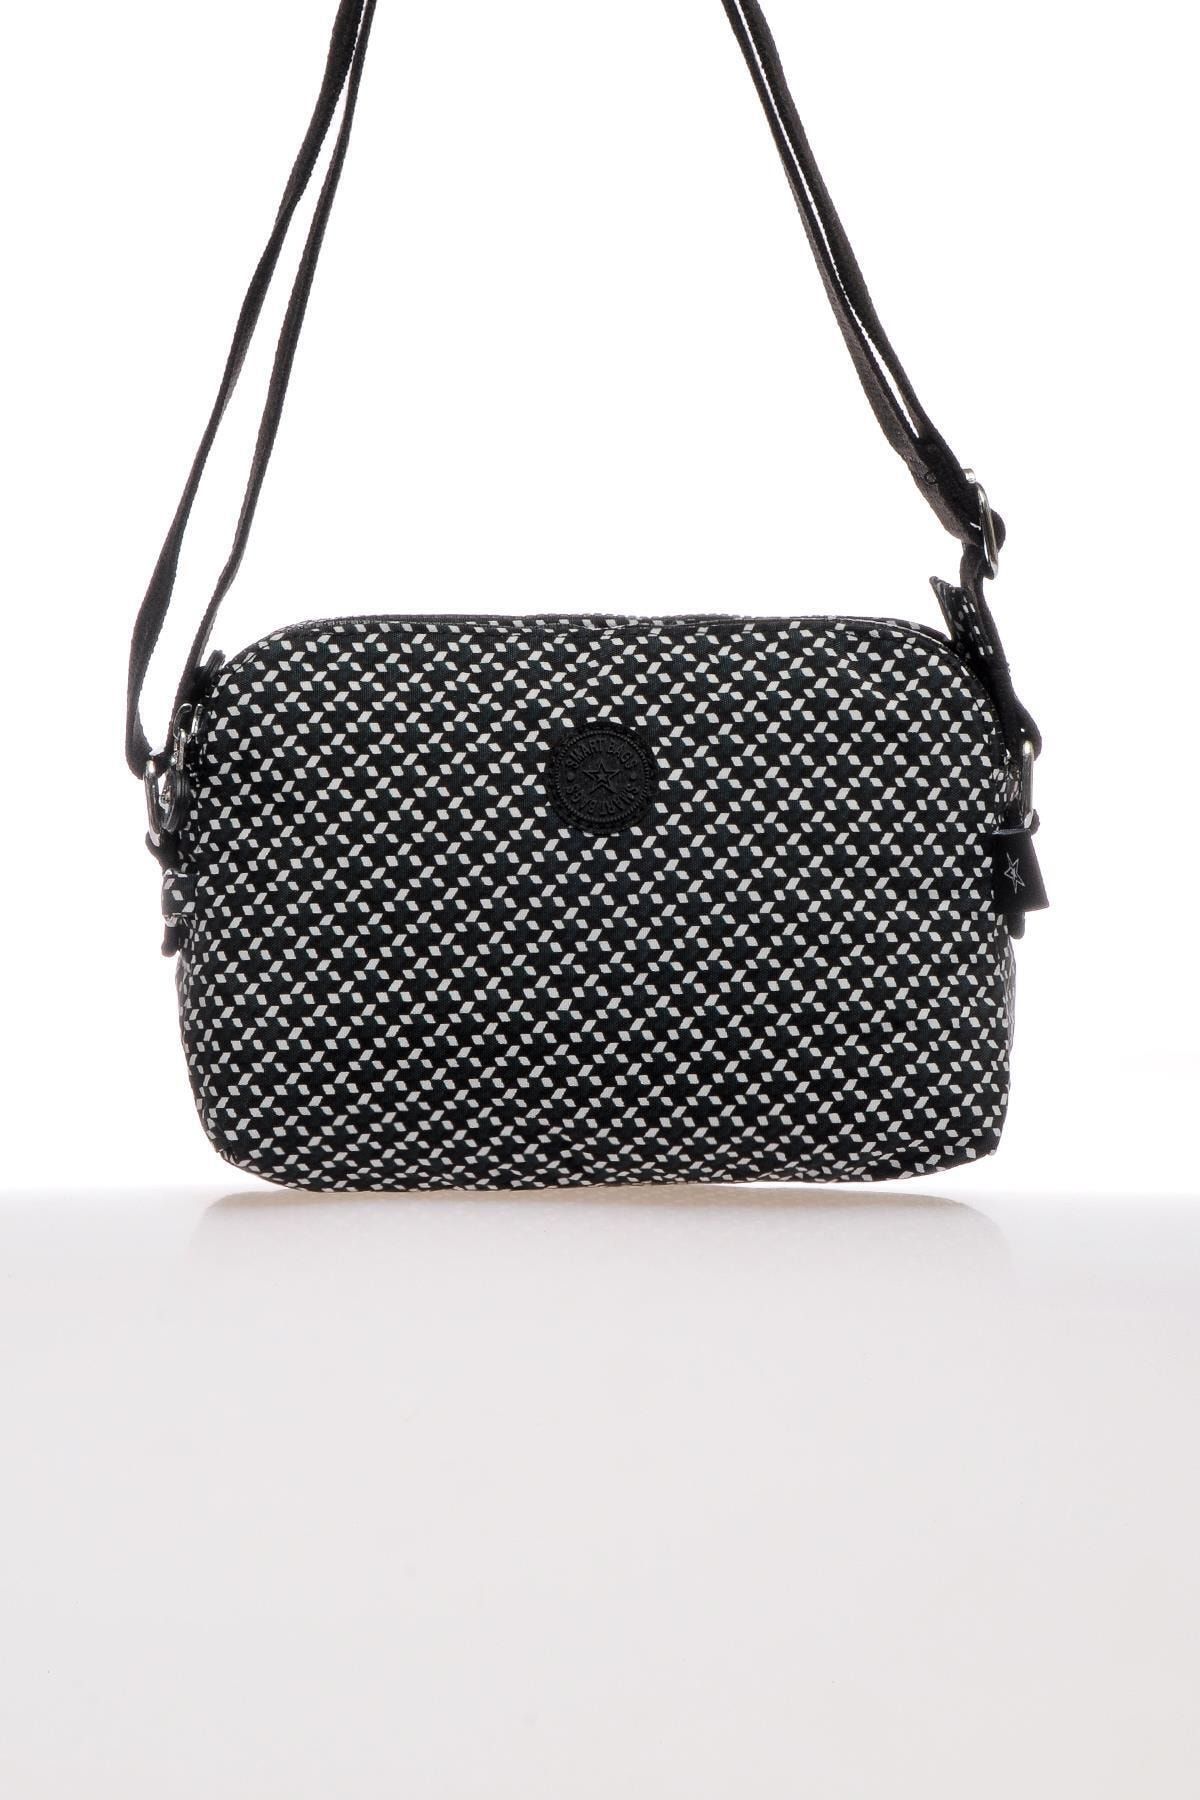 Smart Bags Smb3002-0127 Siyah/beyaz Kadın Çapraz Çanta